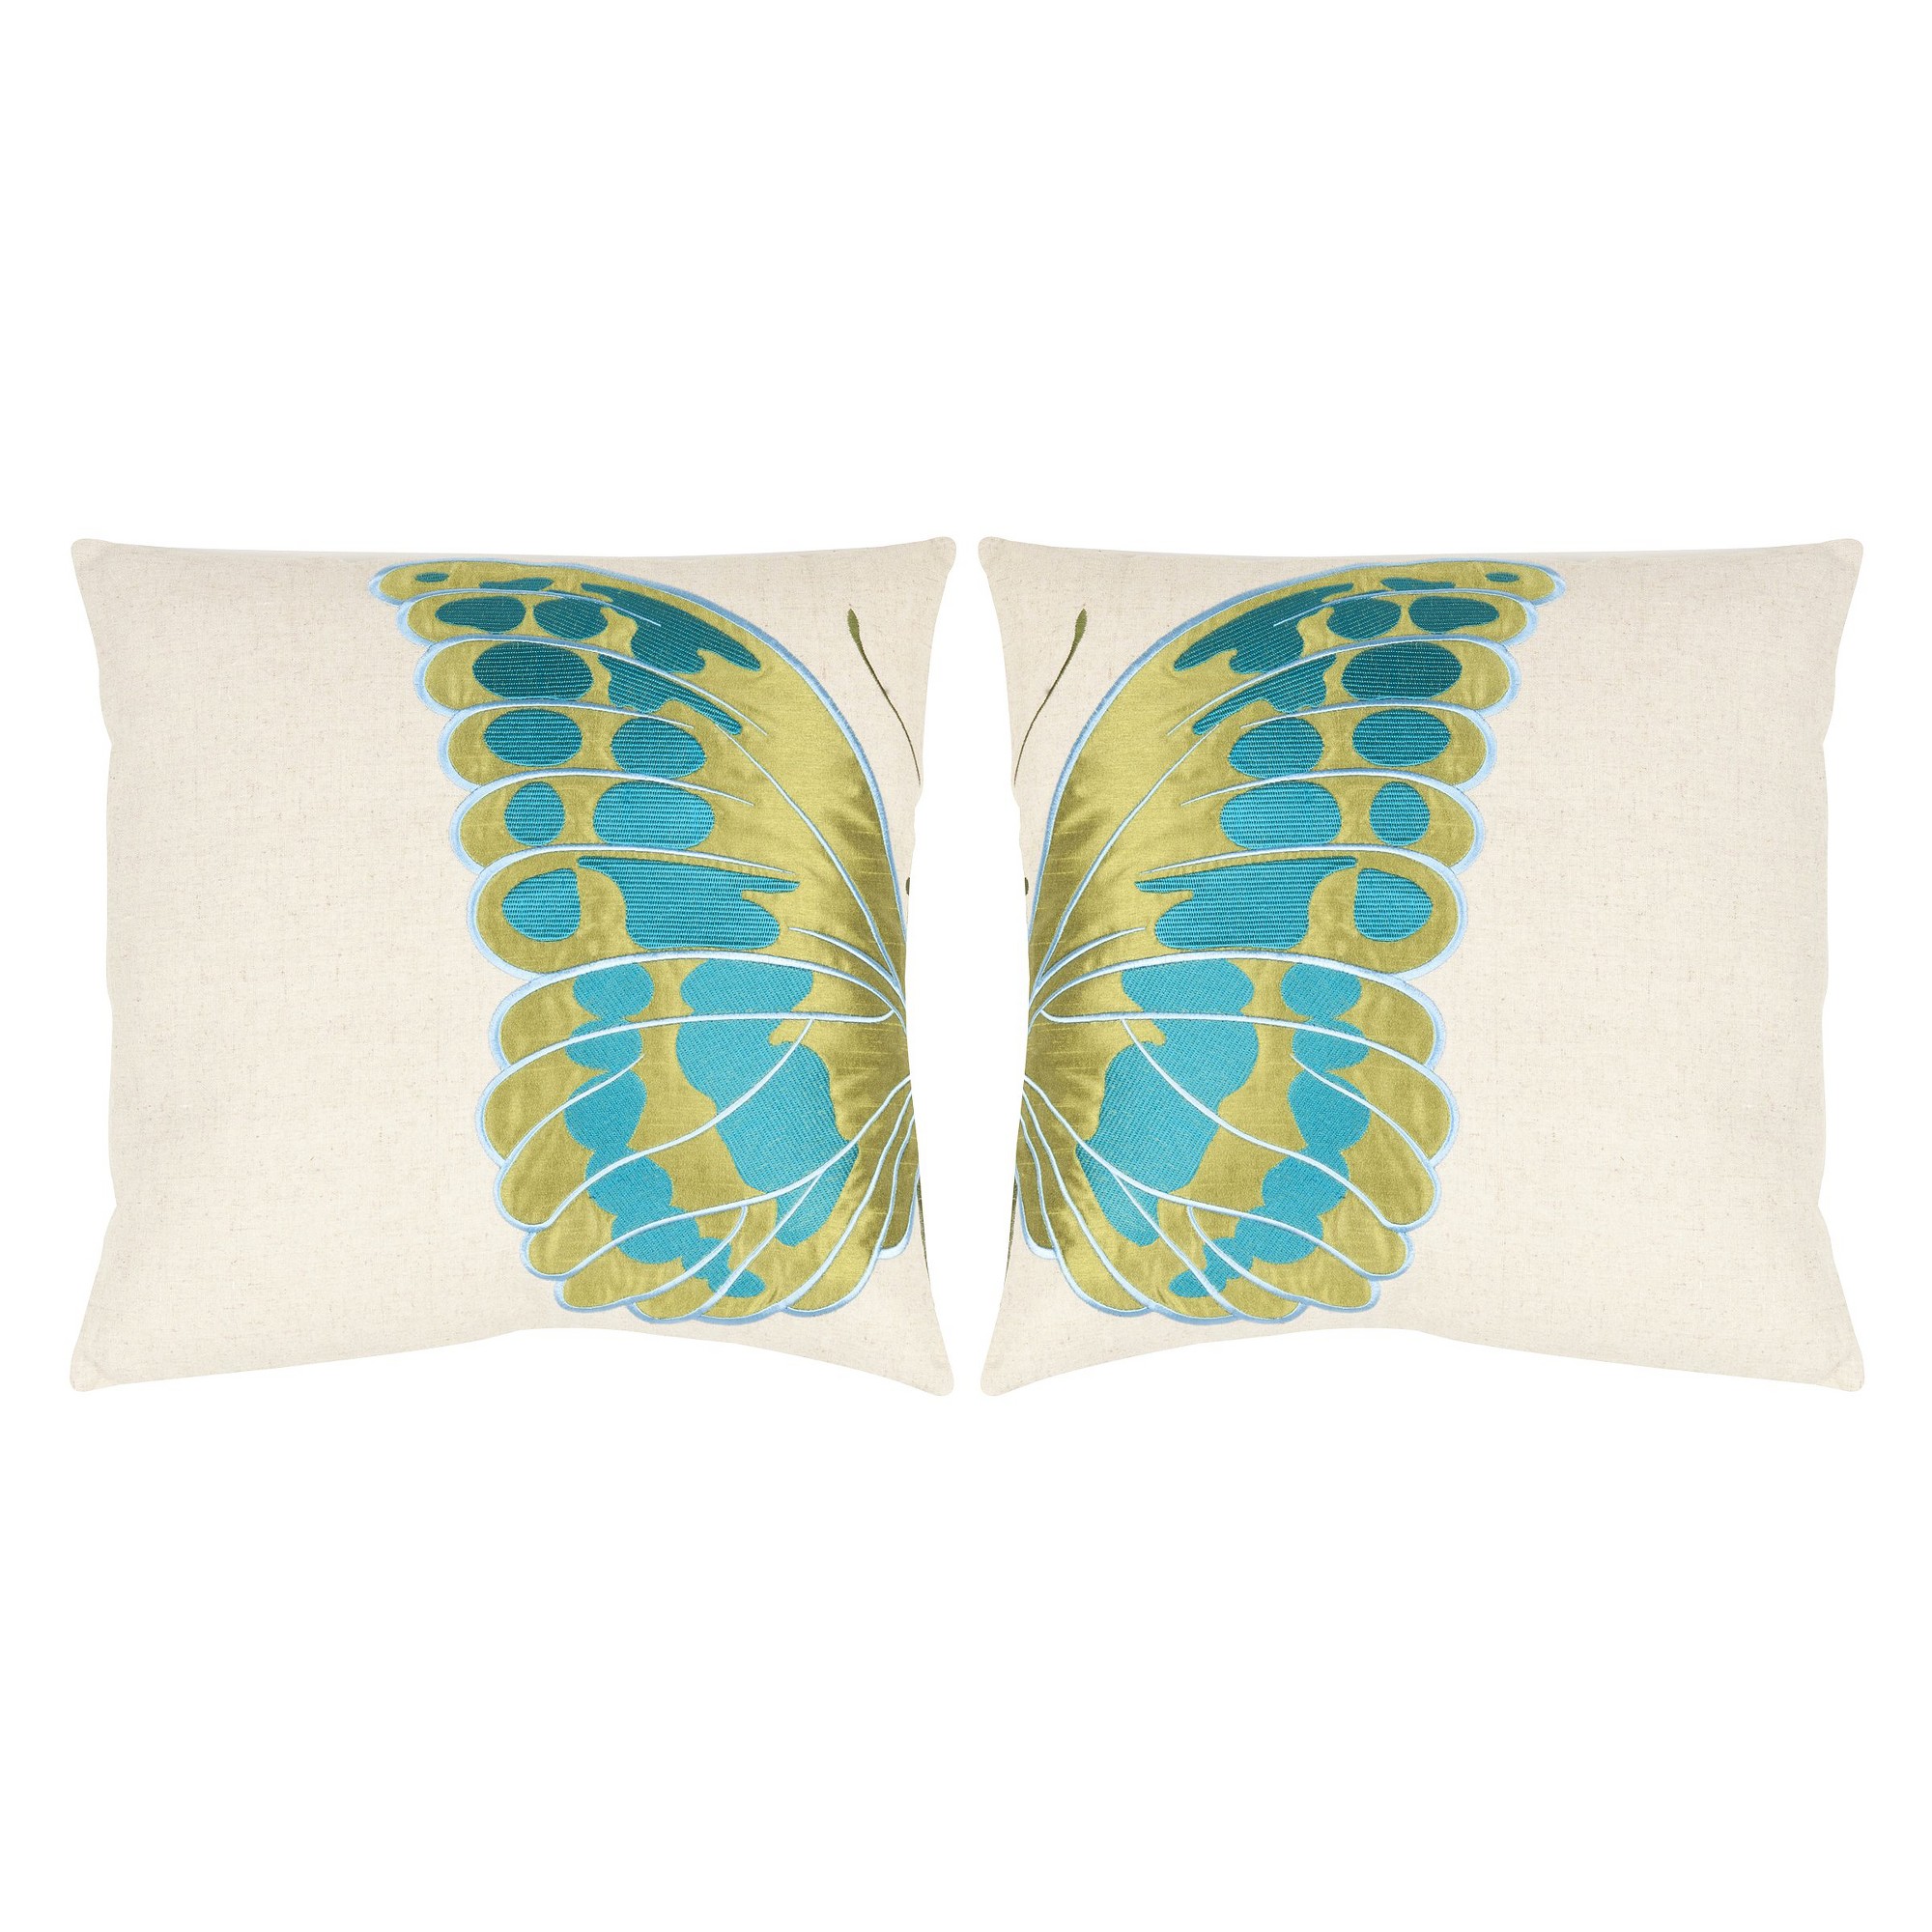 'Cream Indra Blue-Wing Throw Pillow (18''x18'') - Safavieh'